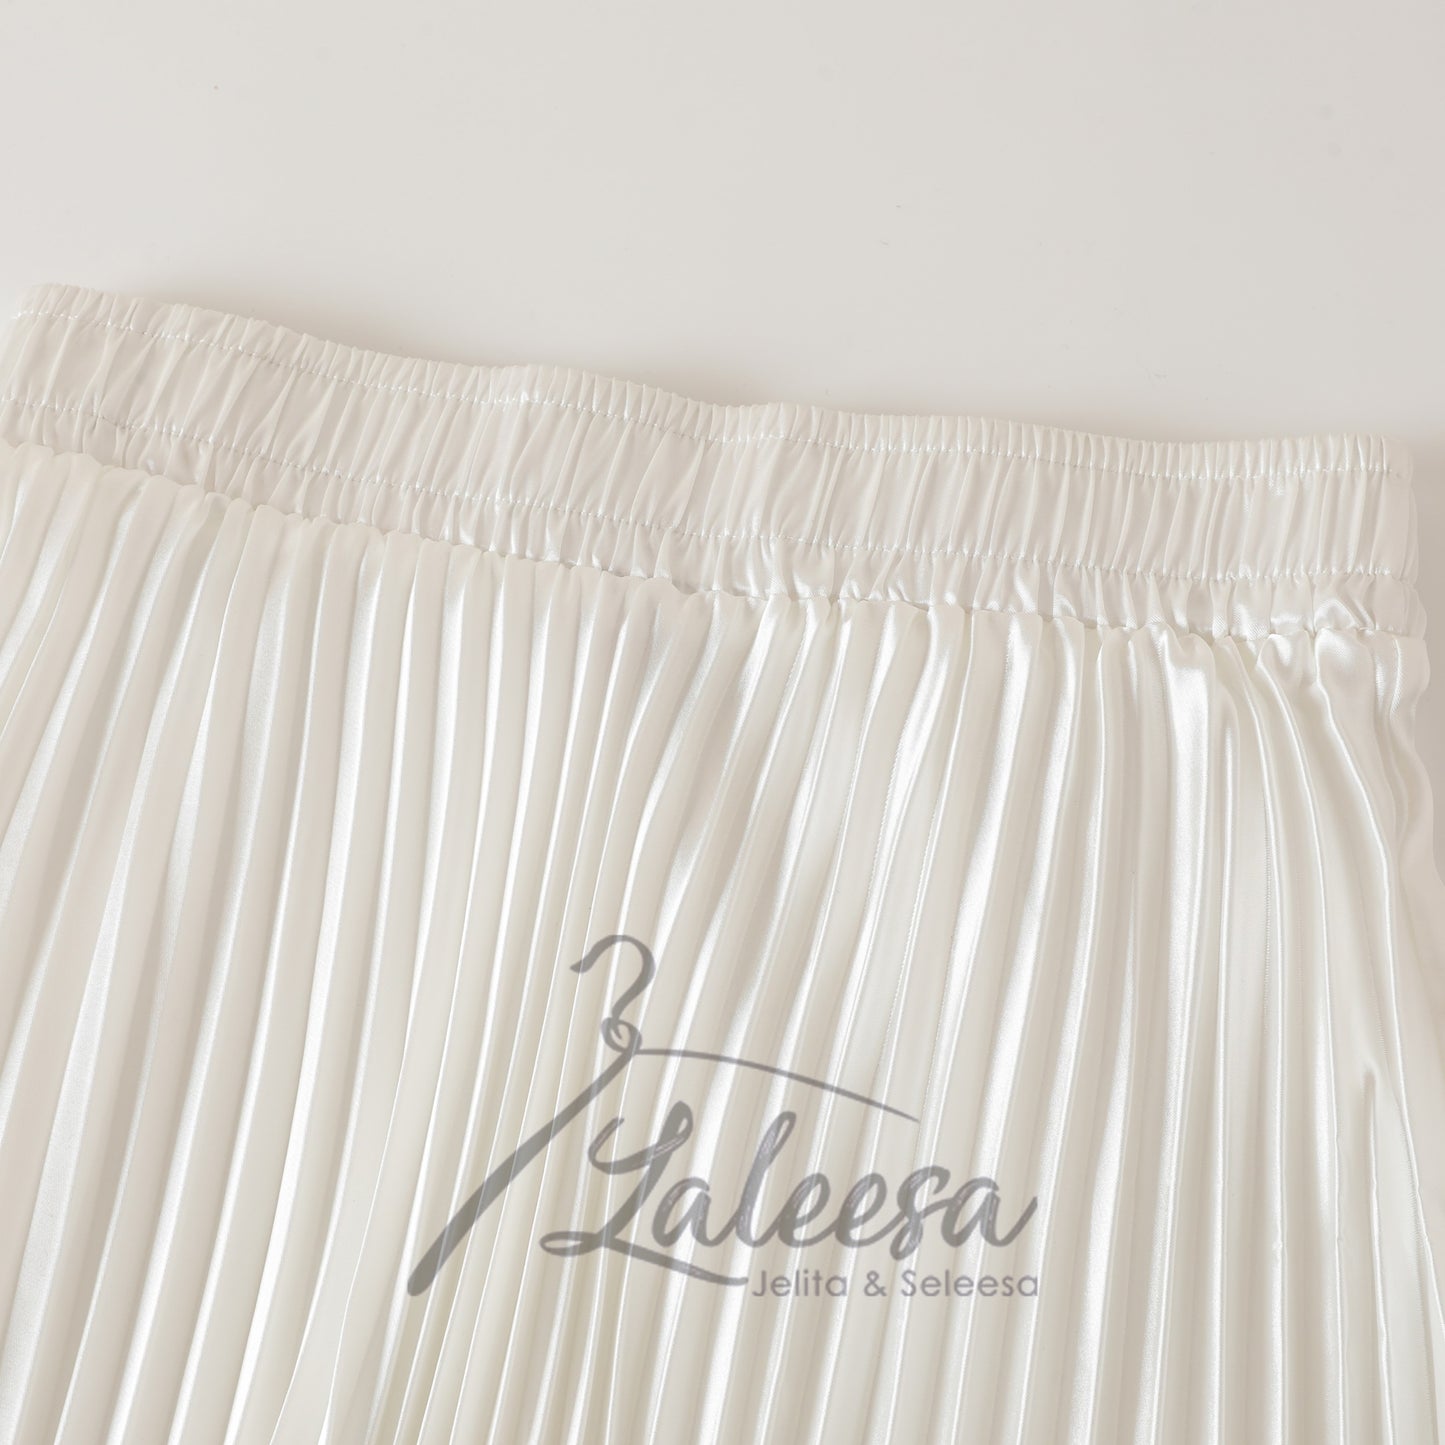 LALEESA SKIRT AMANI PS661651 <Ironless Series> (Ironless) Metallic Pleated High Waist Long Skirt Muslimah Skirt Labuh